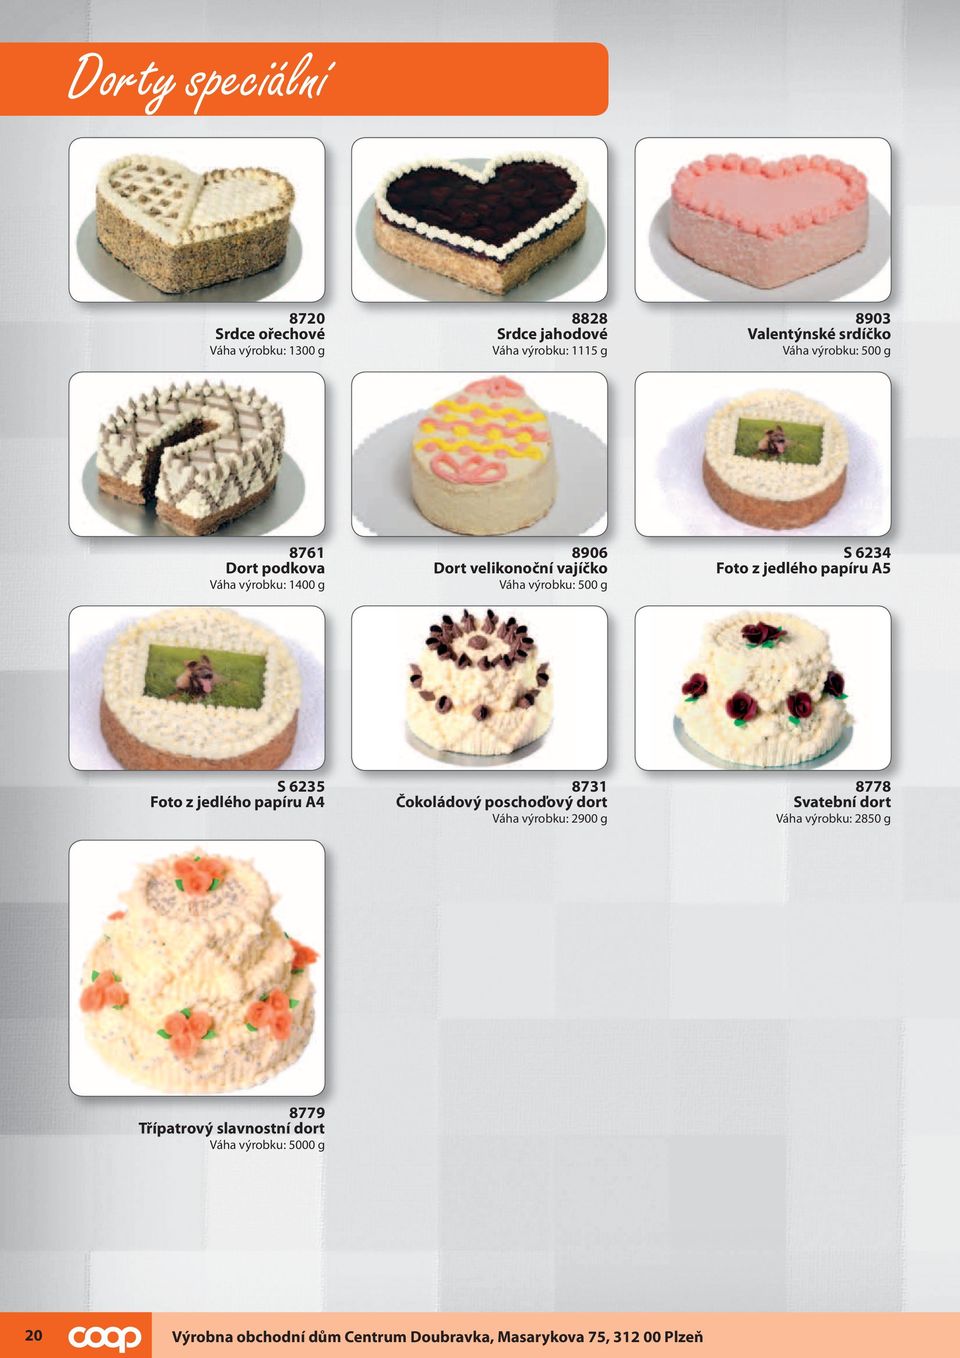 papíru A5 S 6235 Foto z jedlého papíru A4 8731 Čokoládový poschoďový dort Váha výrobku: 2900 g 8778 Svatební dort Váha výrobku: